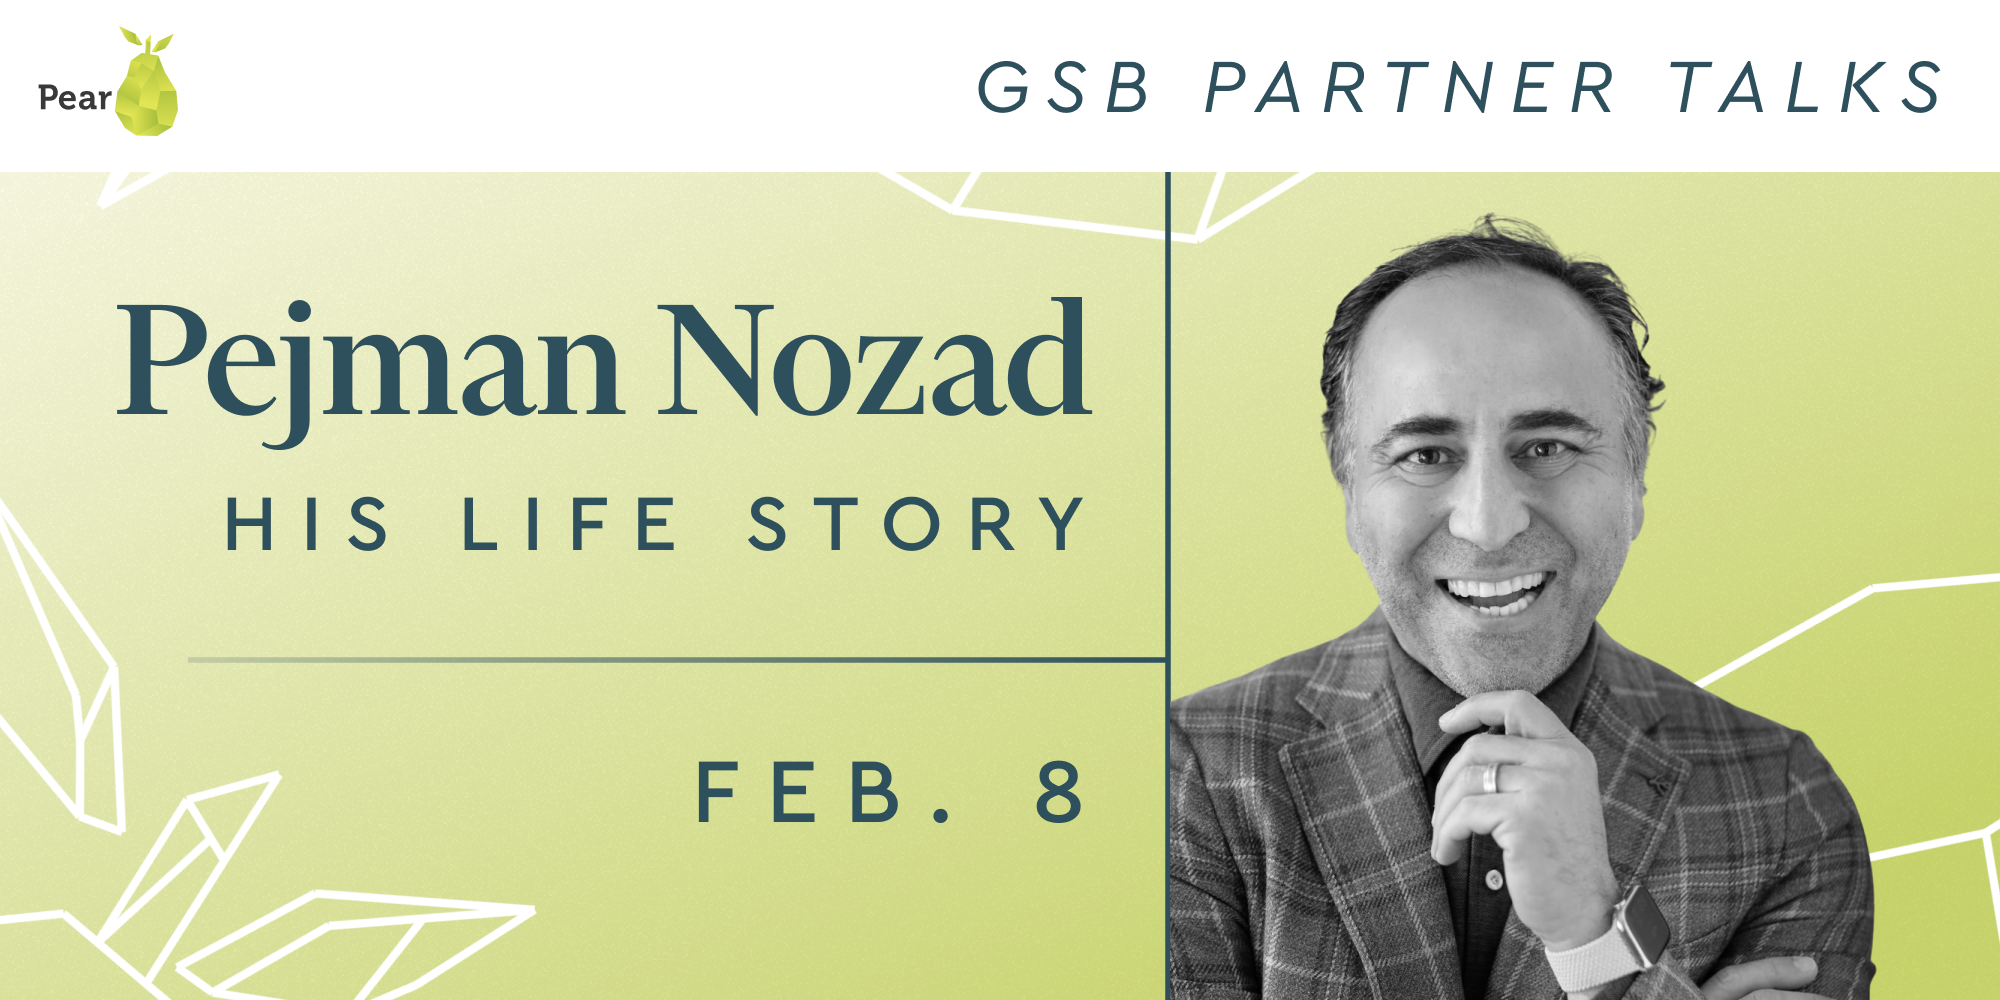 resources GSB Partner Talks: Pear VC’s Pejman Nozad’s Life Story